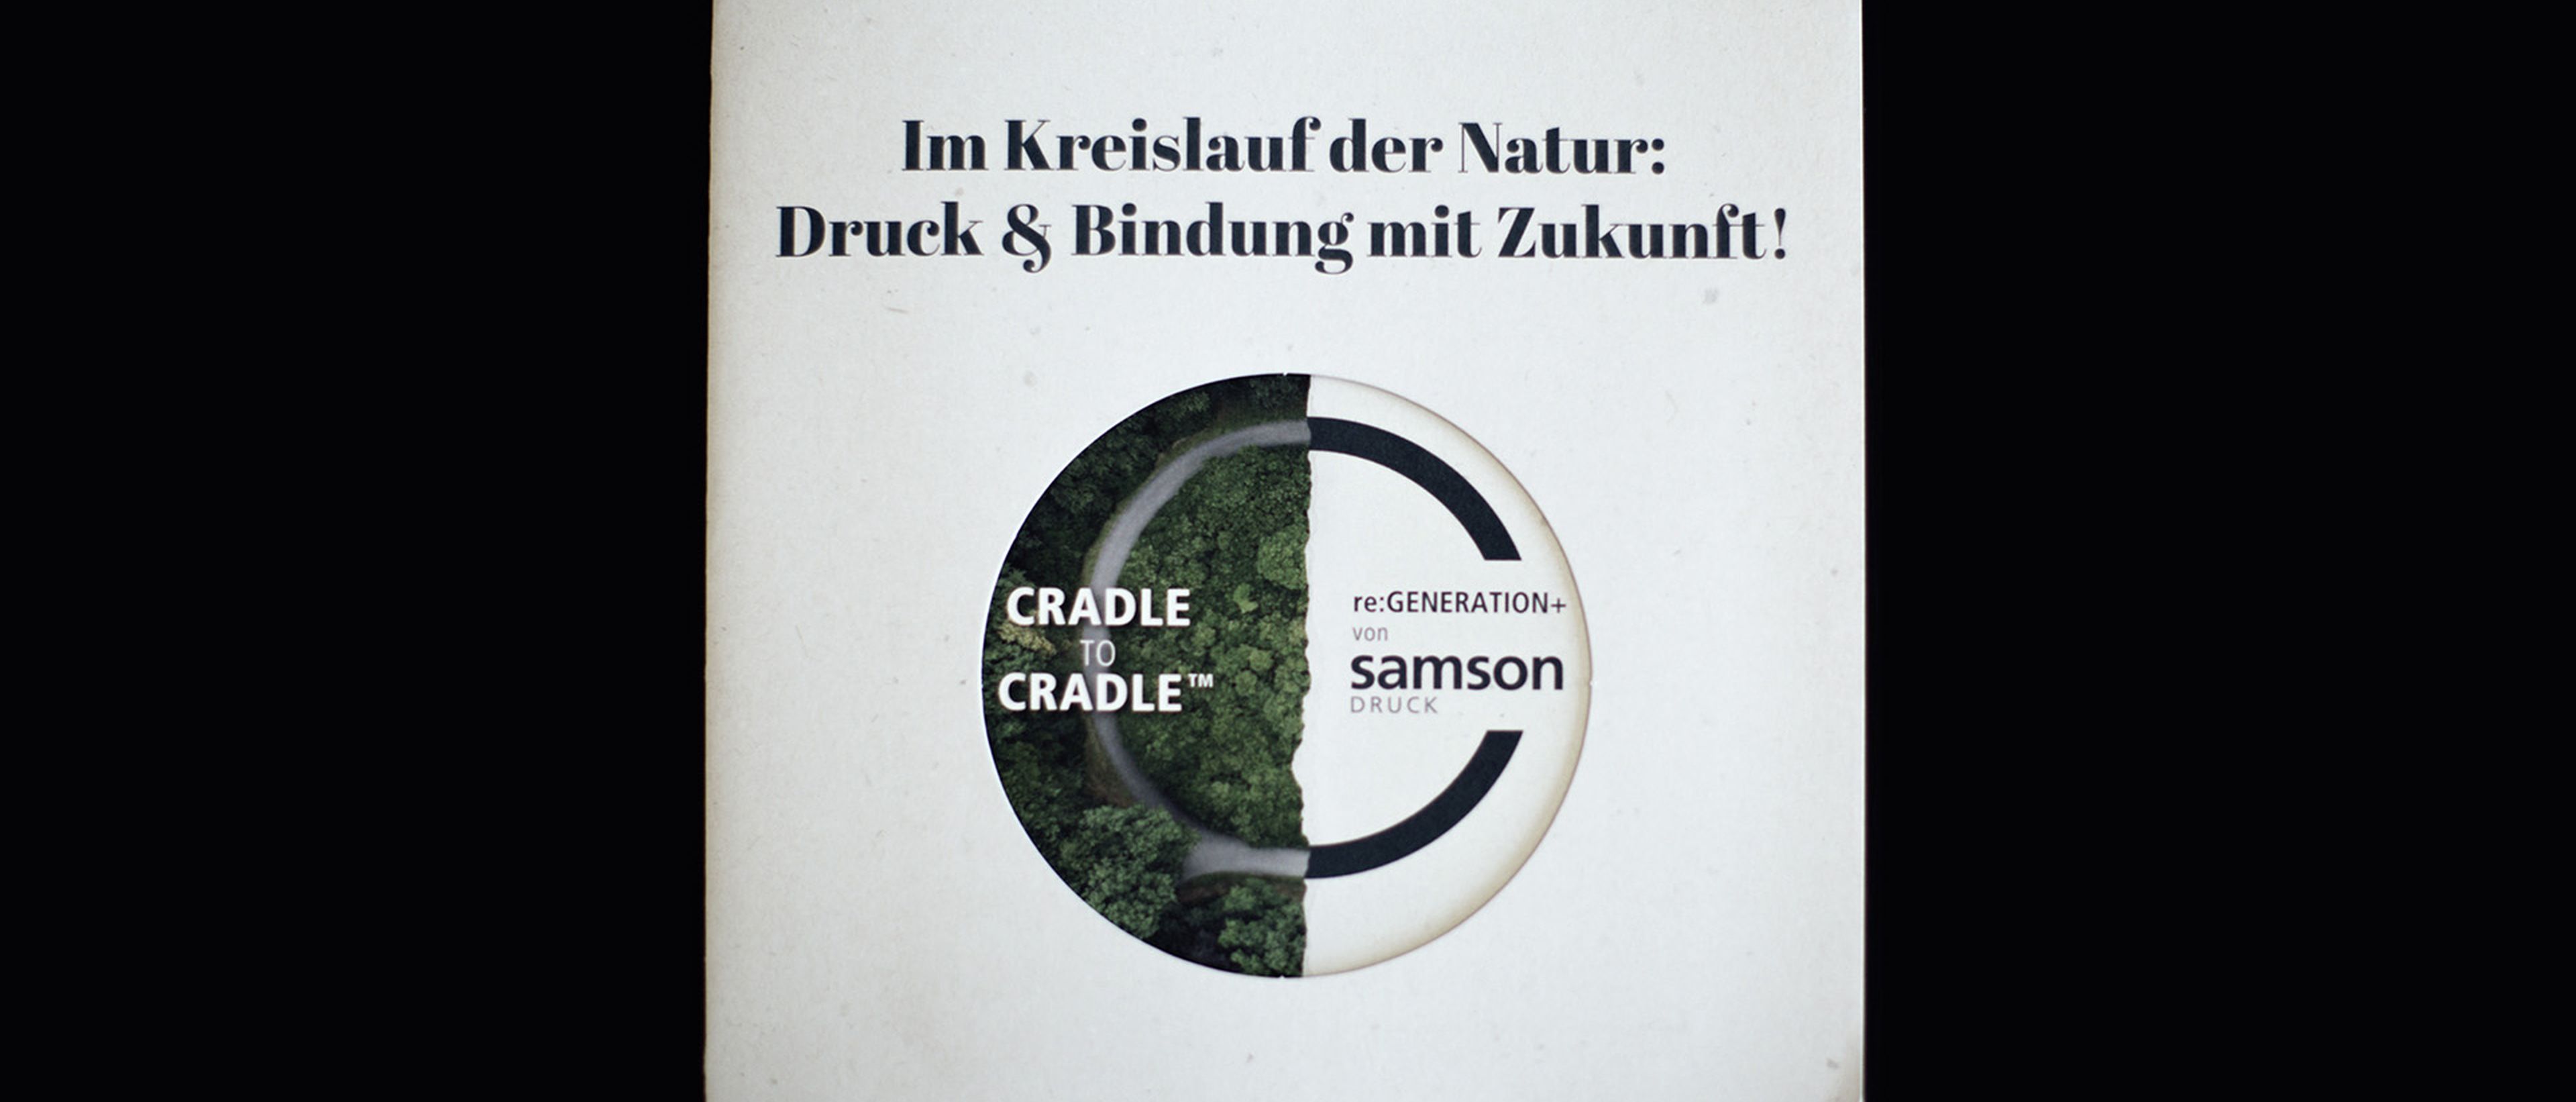 "Cradle to cradle" Mailing von Samson Druck